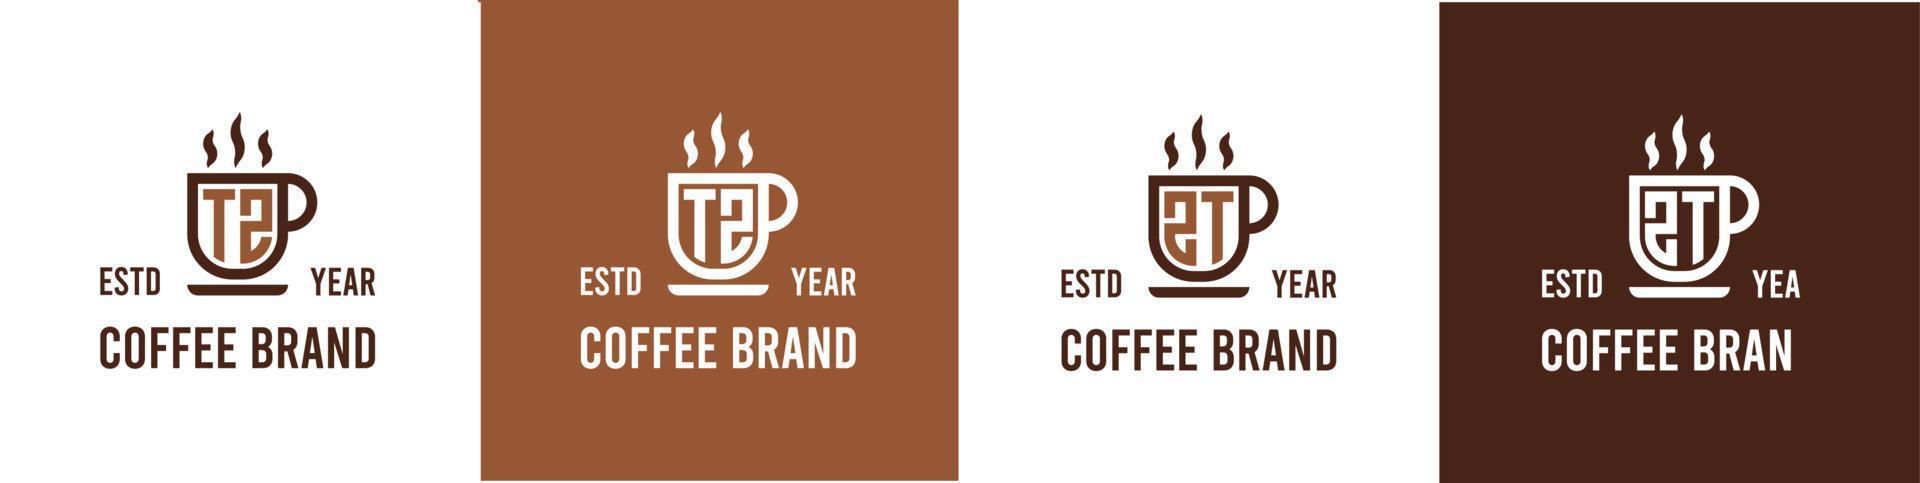 letra tz y zt café logo, adecuado para ninguna negocio relacionado a café, té, o otro con tz o zt iniciales. vector